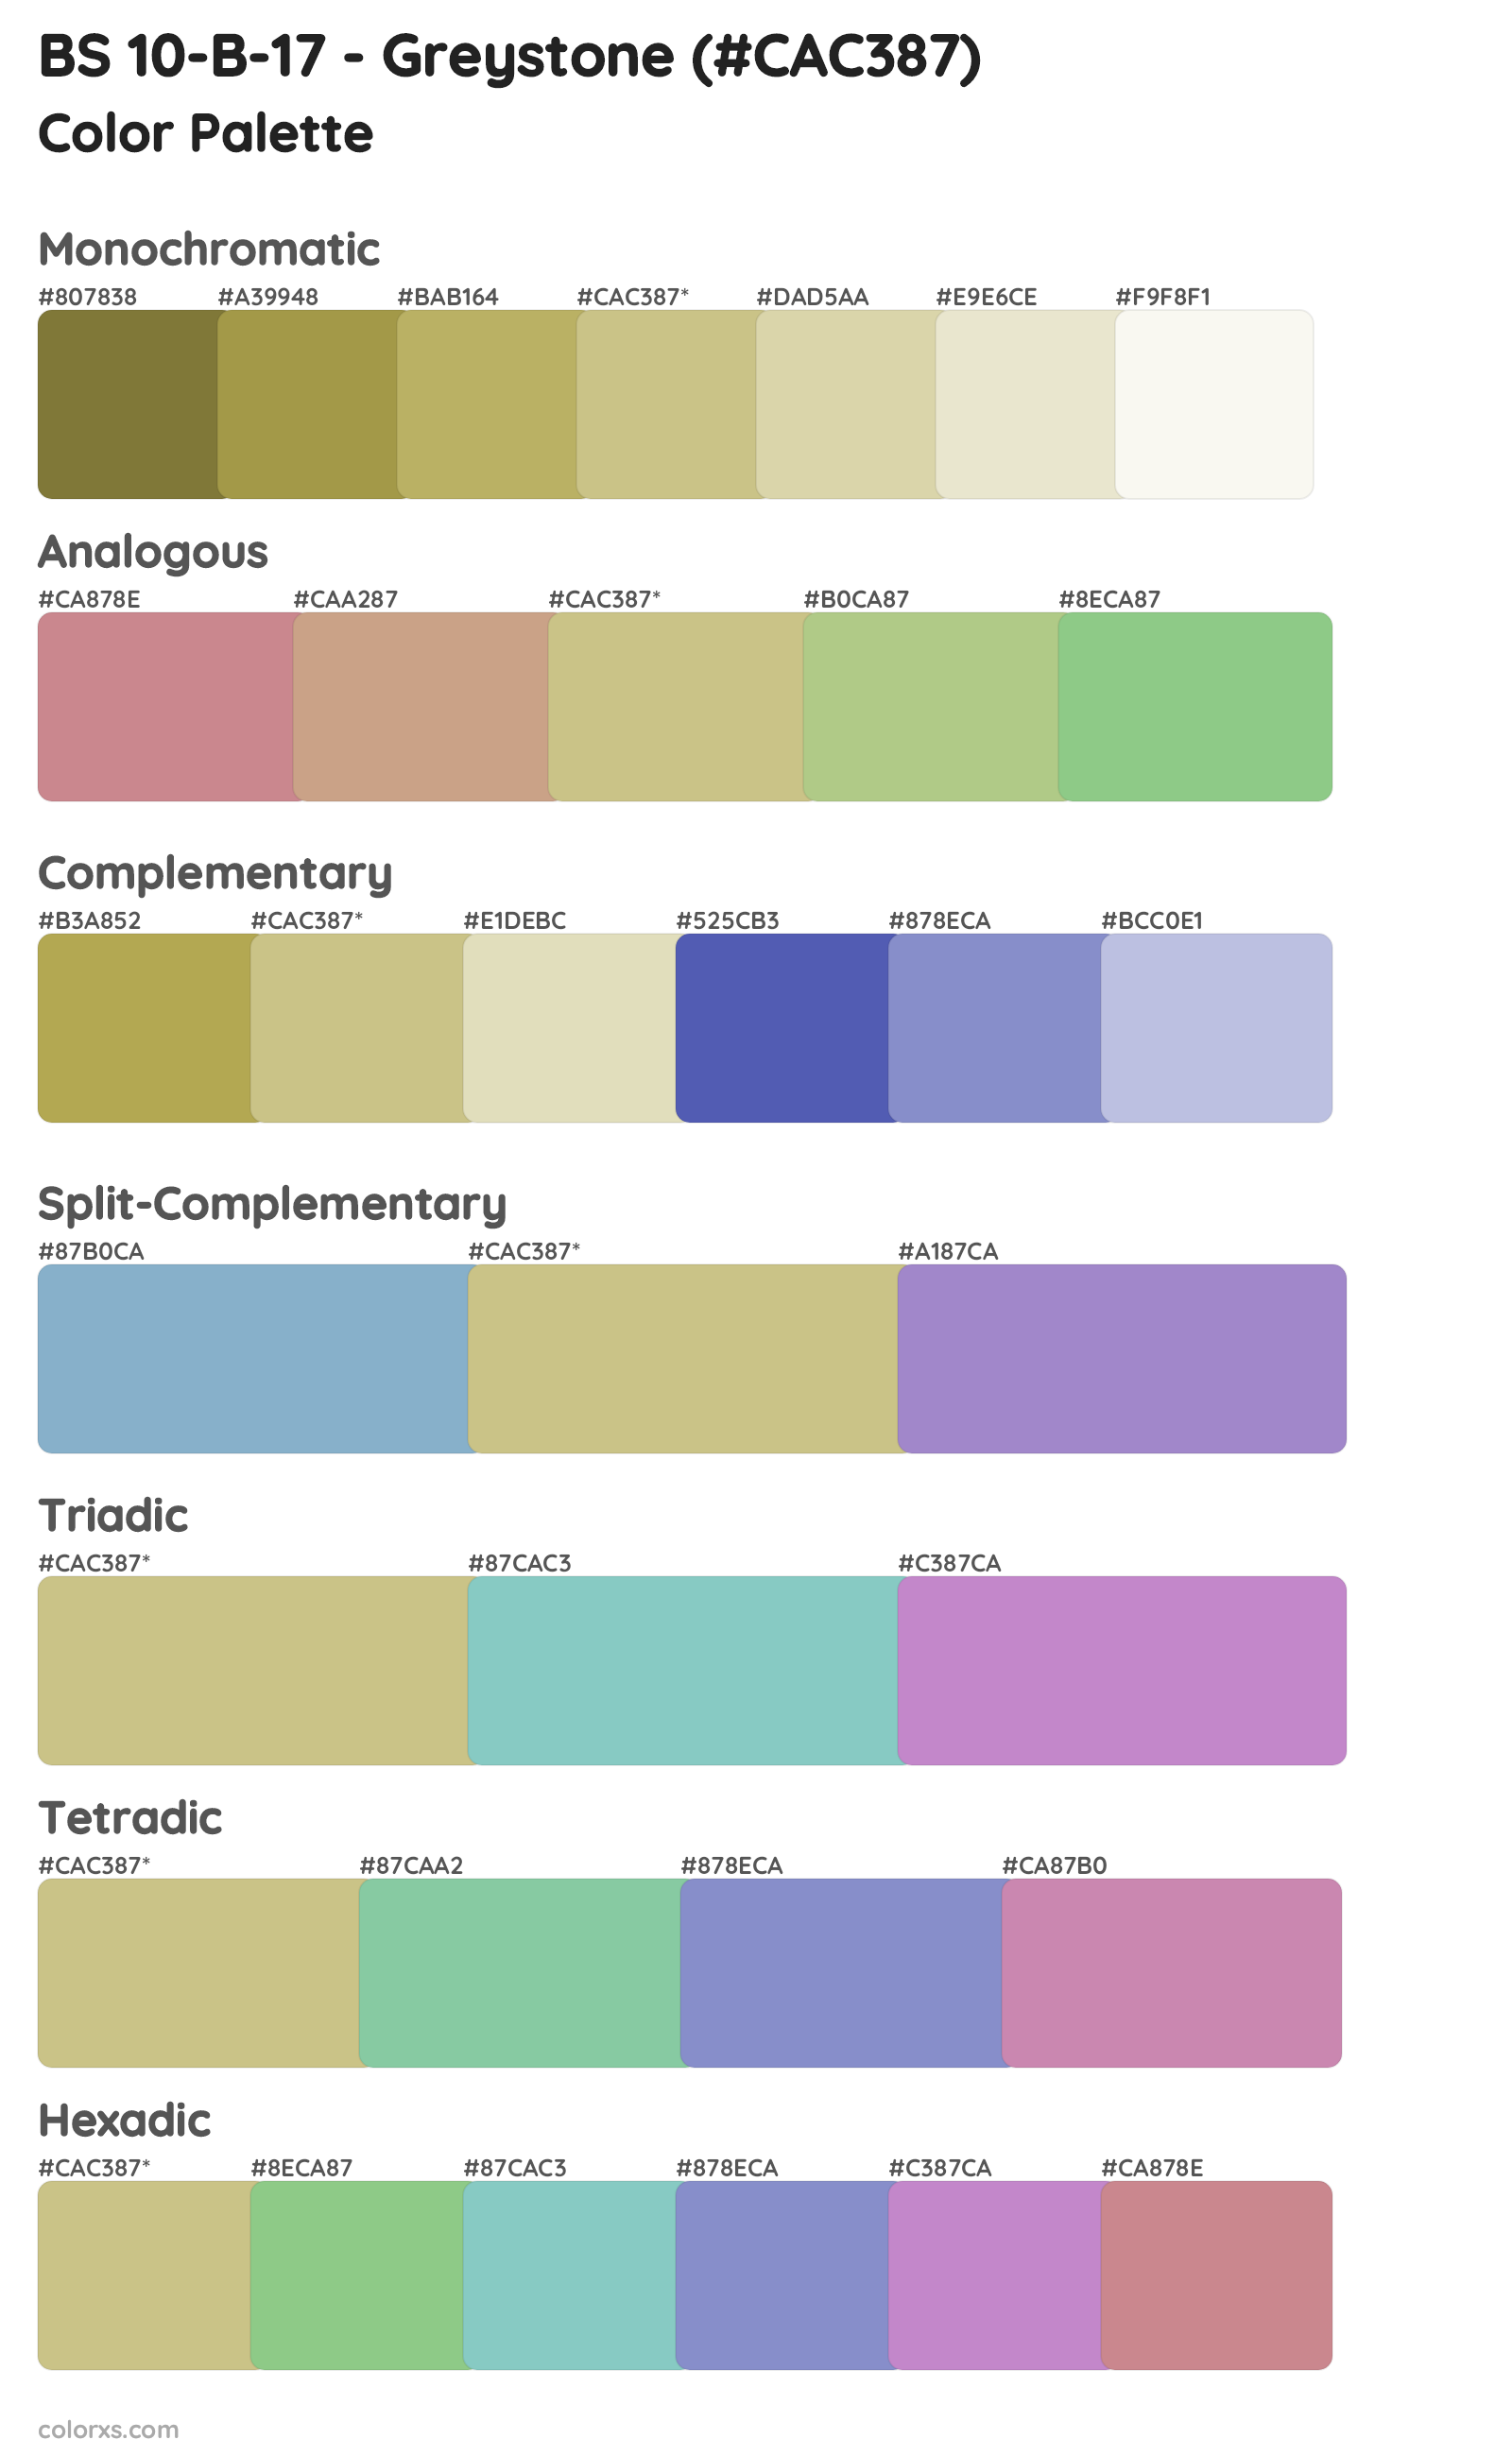 BS 10-B-17 - Greystone Color Scheme Palettes